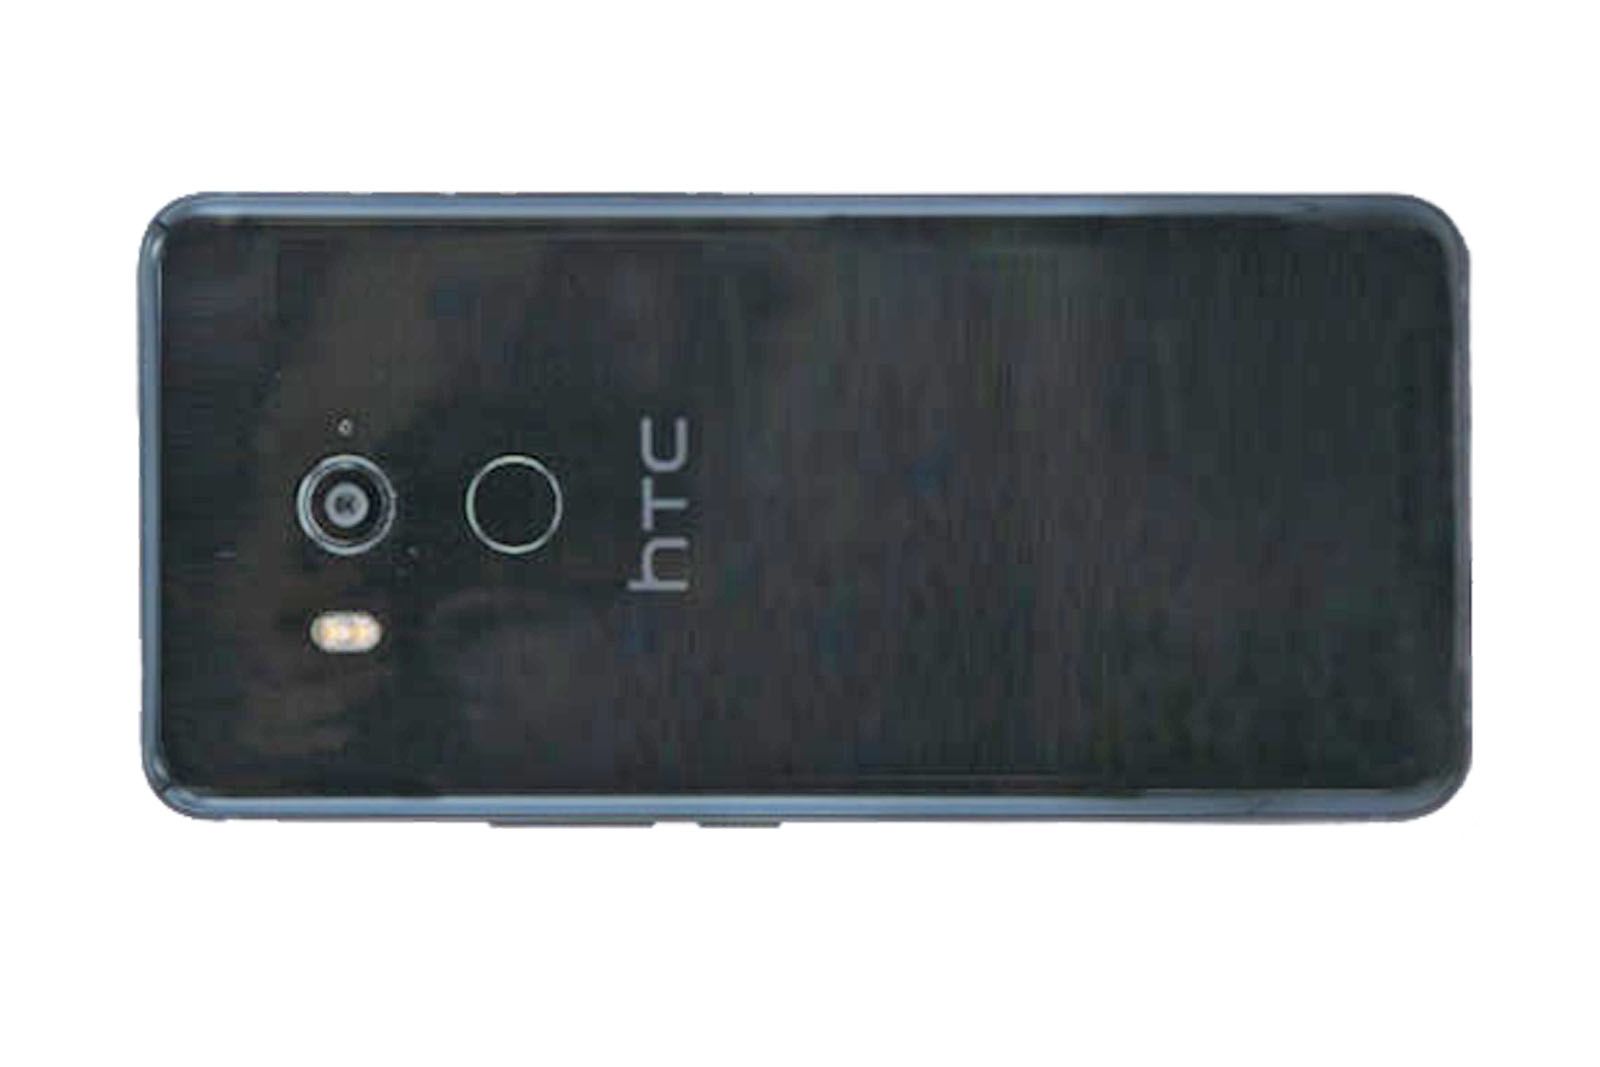 HTC U11 Plus photos reveal stunning future phone image 3